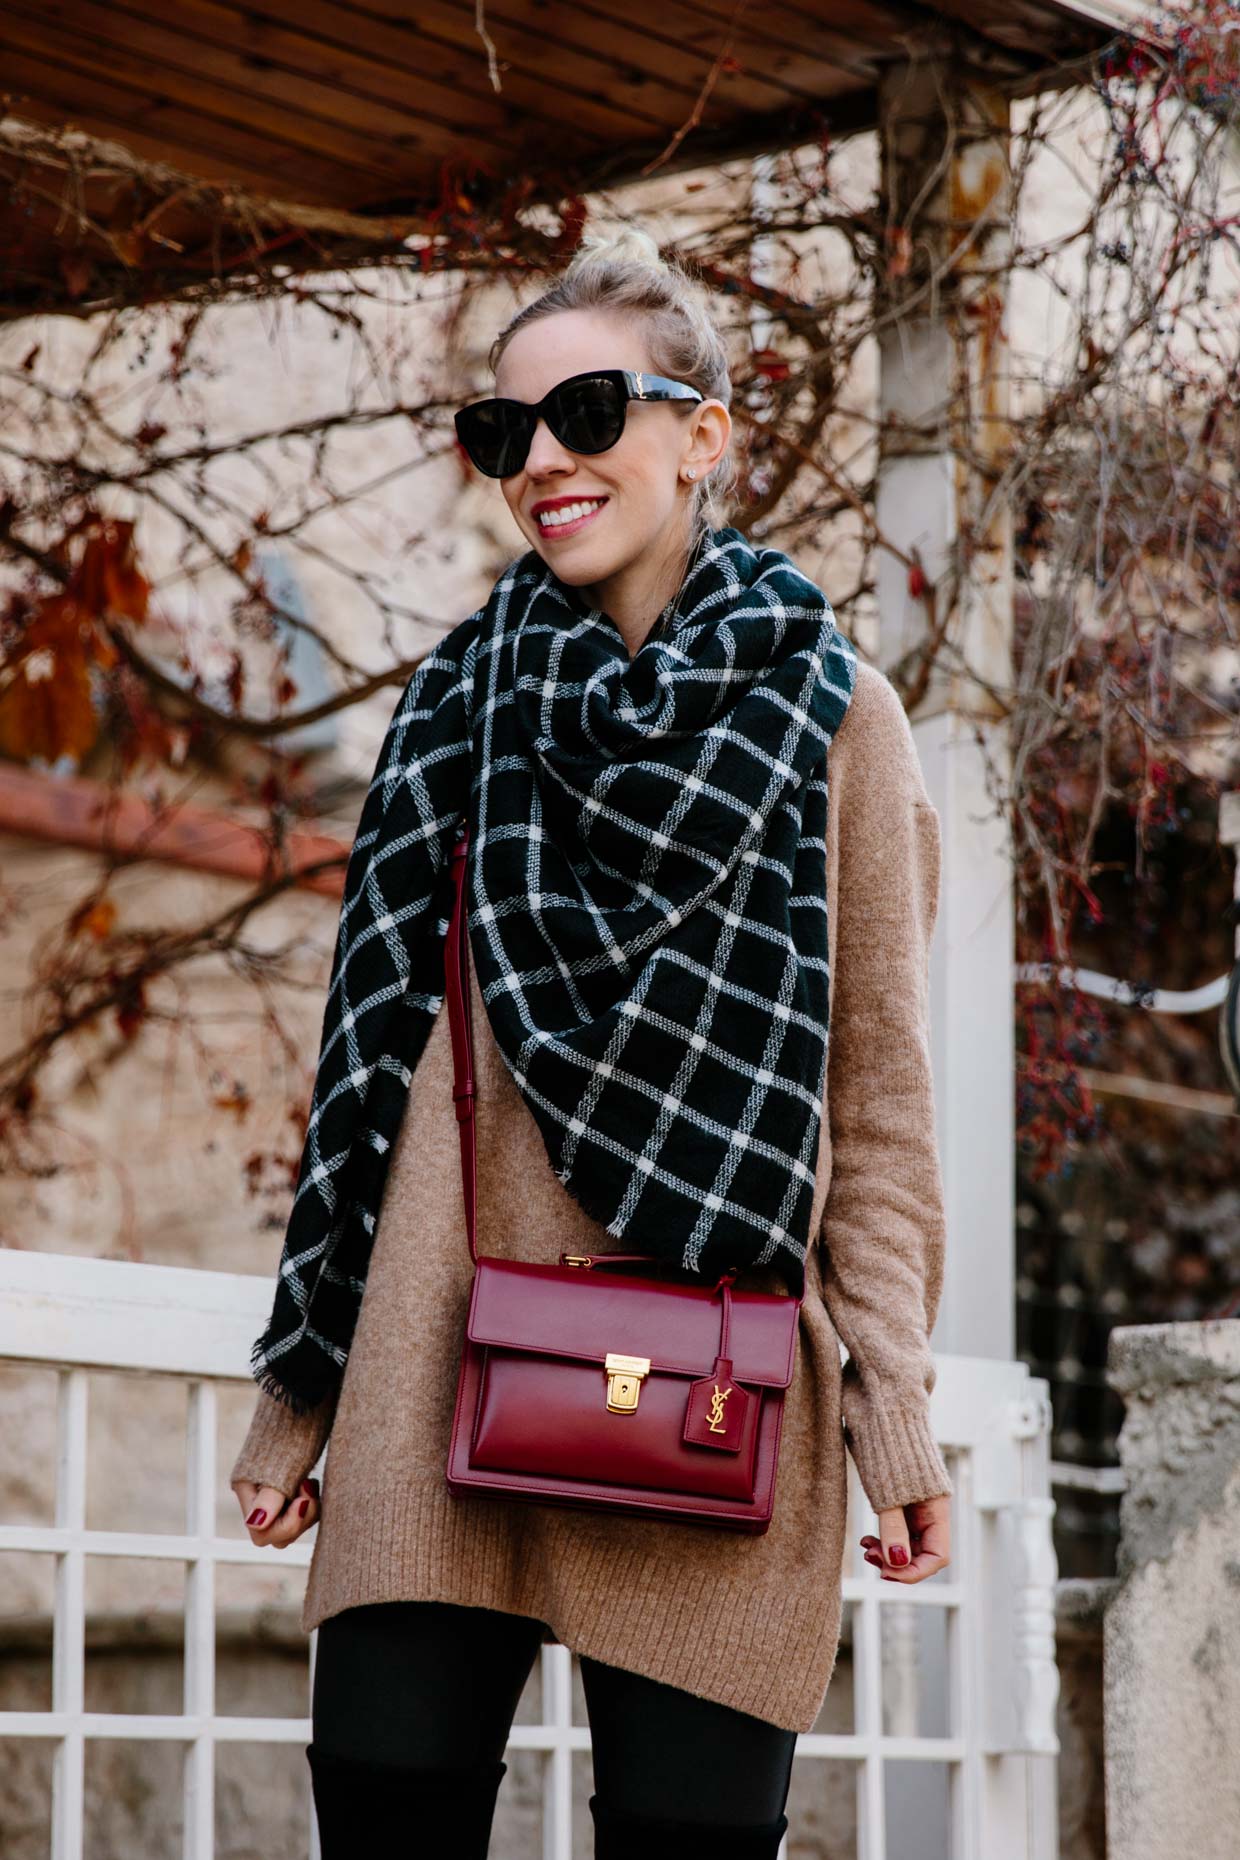 Leather Jacket & Louis Vuitton Scarf - Meagan's Moda  Louis vuitton scarf,  Casual winter outfits, Outfits